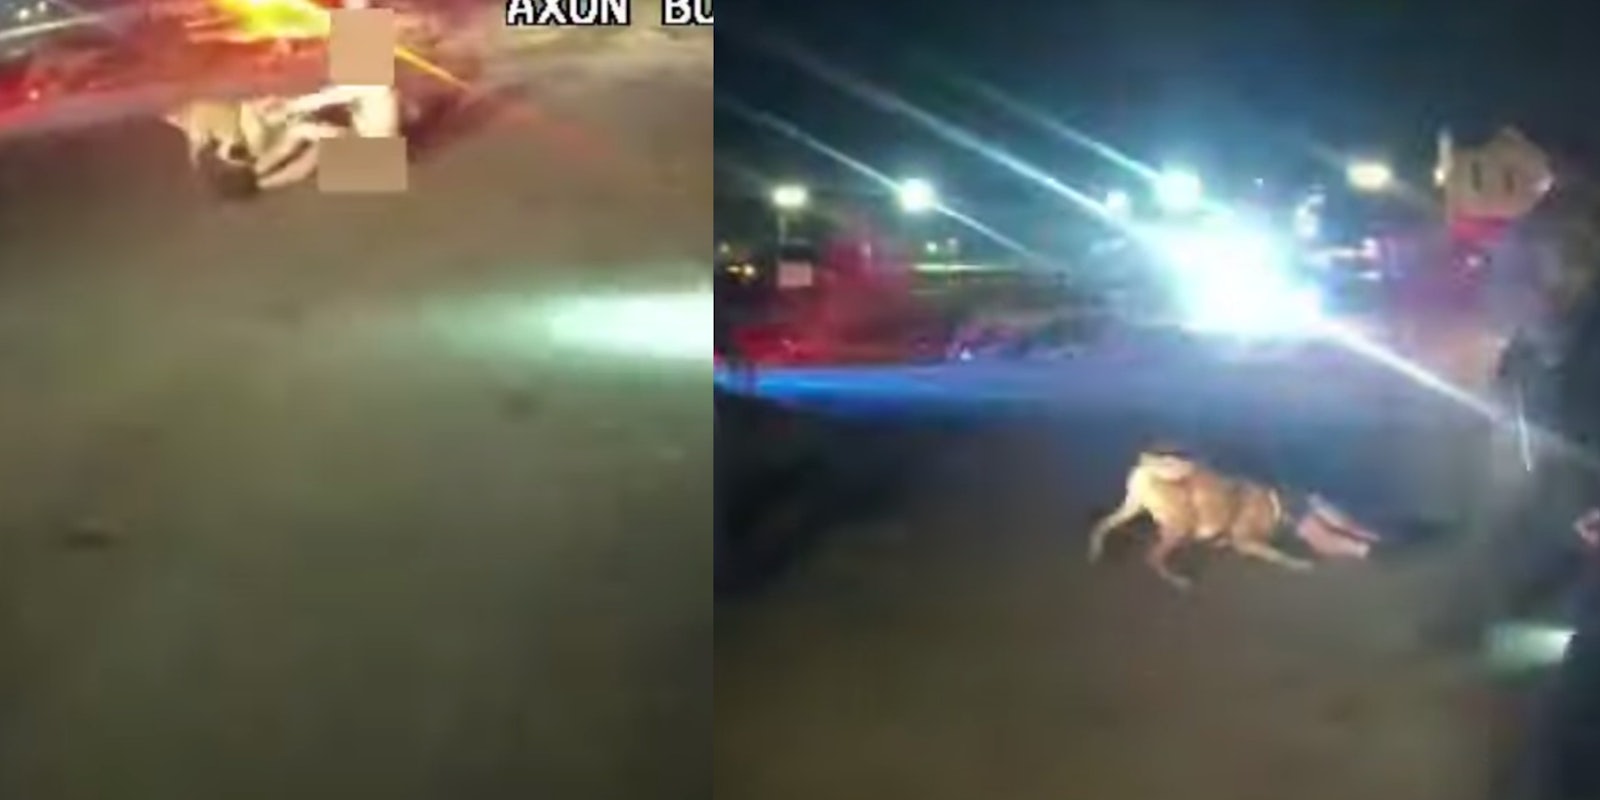 Bodycam footage shows the K9 pulling at Washington's leg